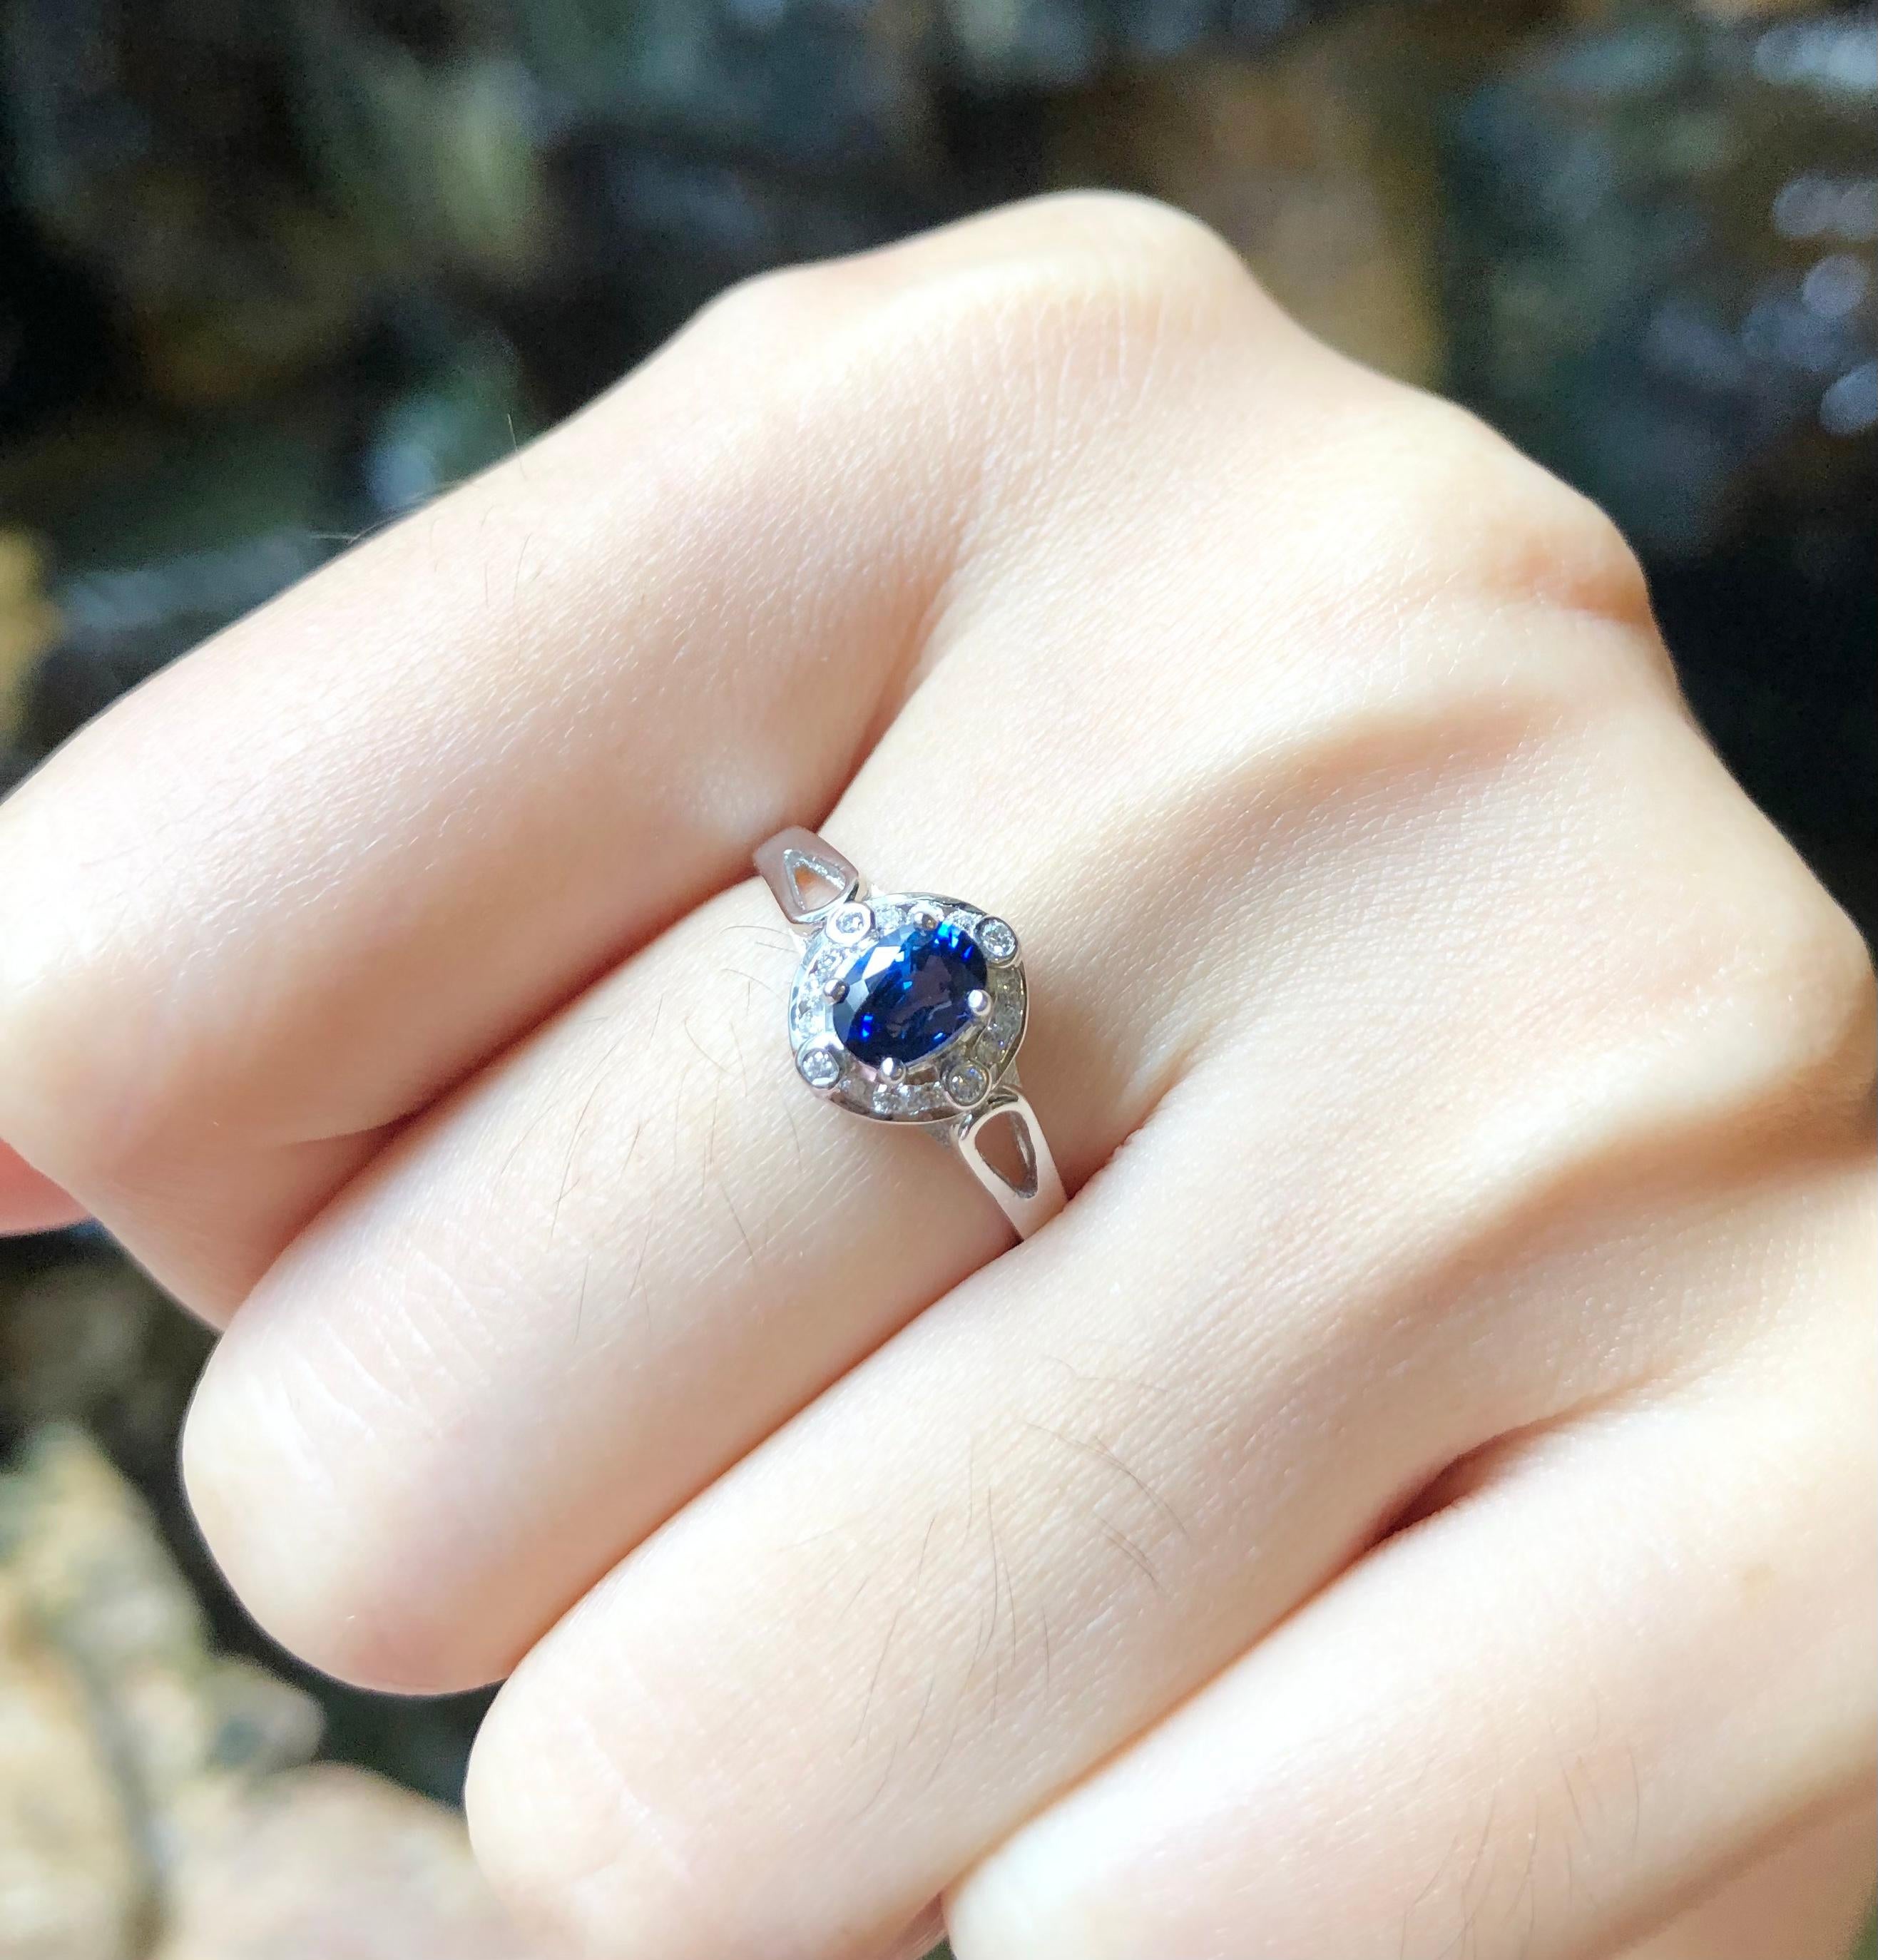 Blue Sapphire 0.60 carat with Diamond 0.11 carat Ring set in 18 Karat White Gold Settings

Width:  0.7 cm 
Length: 0.8 cm
Ring Size: 50
Total Weight: 2.23 grams

Blue Sapphire 
Width:  0.4 cm 
Length: 0.8 cm

